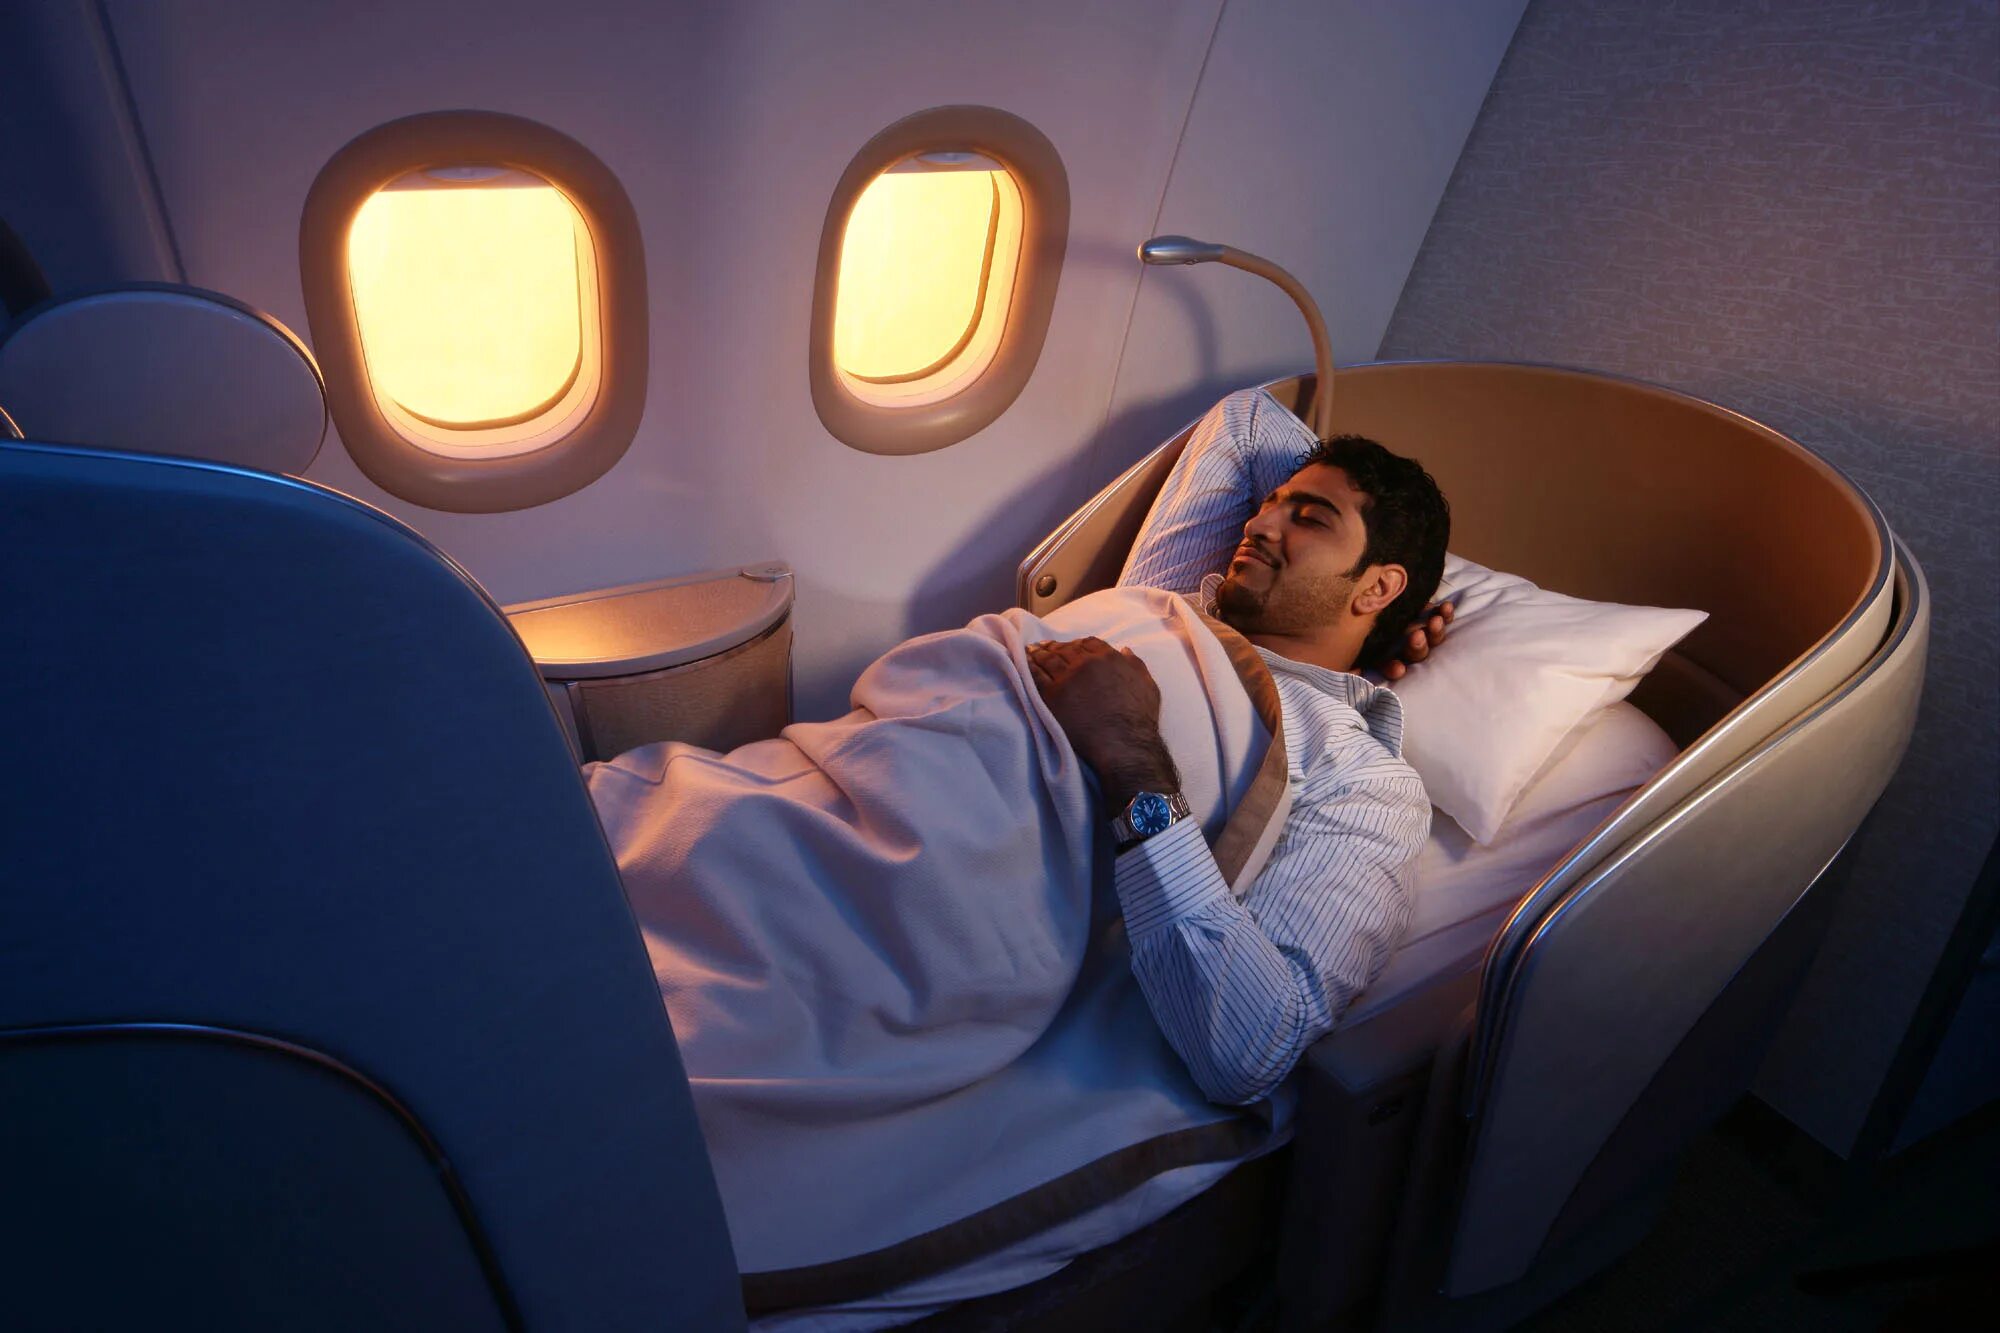 First class 0. Etihad бизнес класс. Этихад внутри. Полет бизнес классом. Etihad Airways бизнес класс.